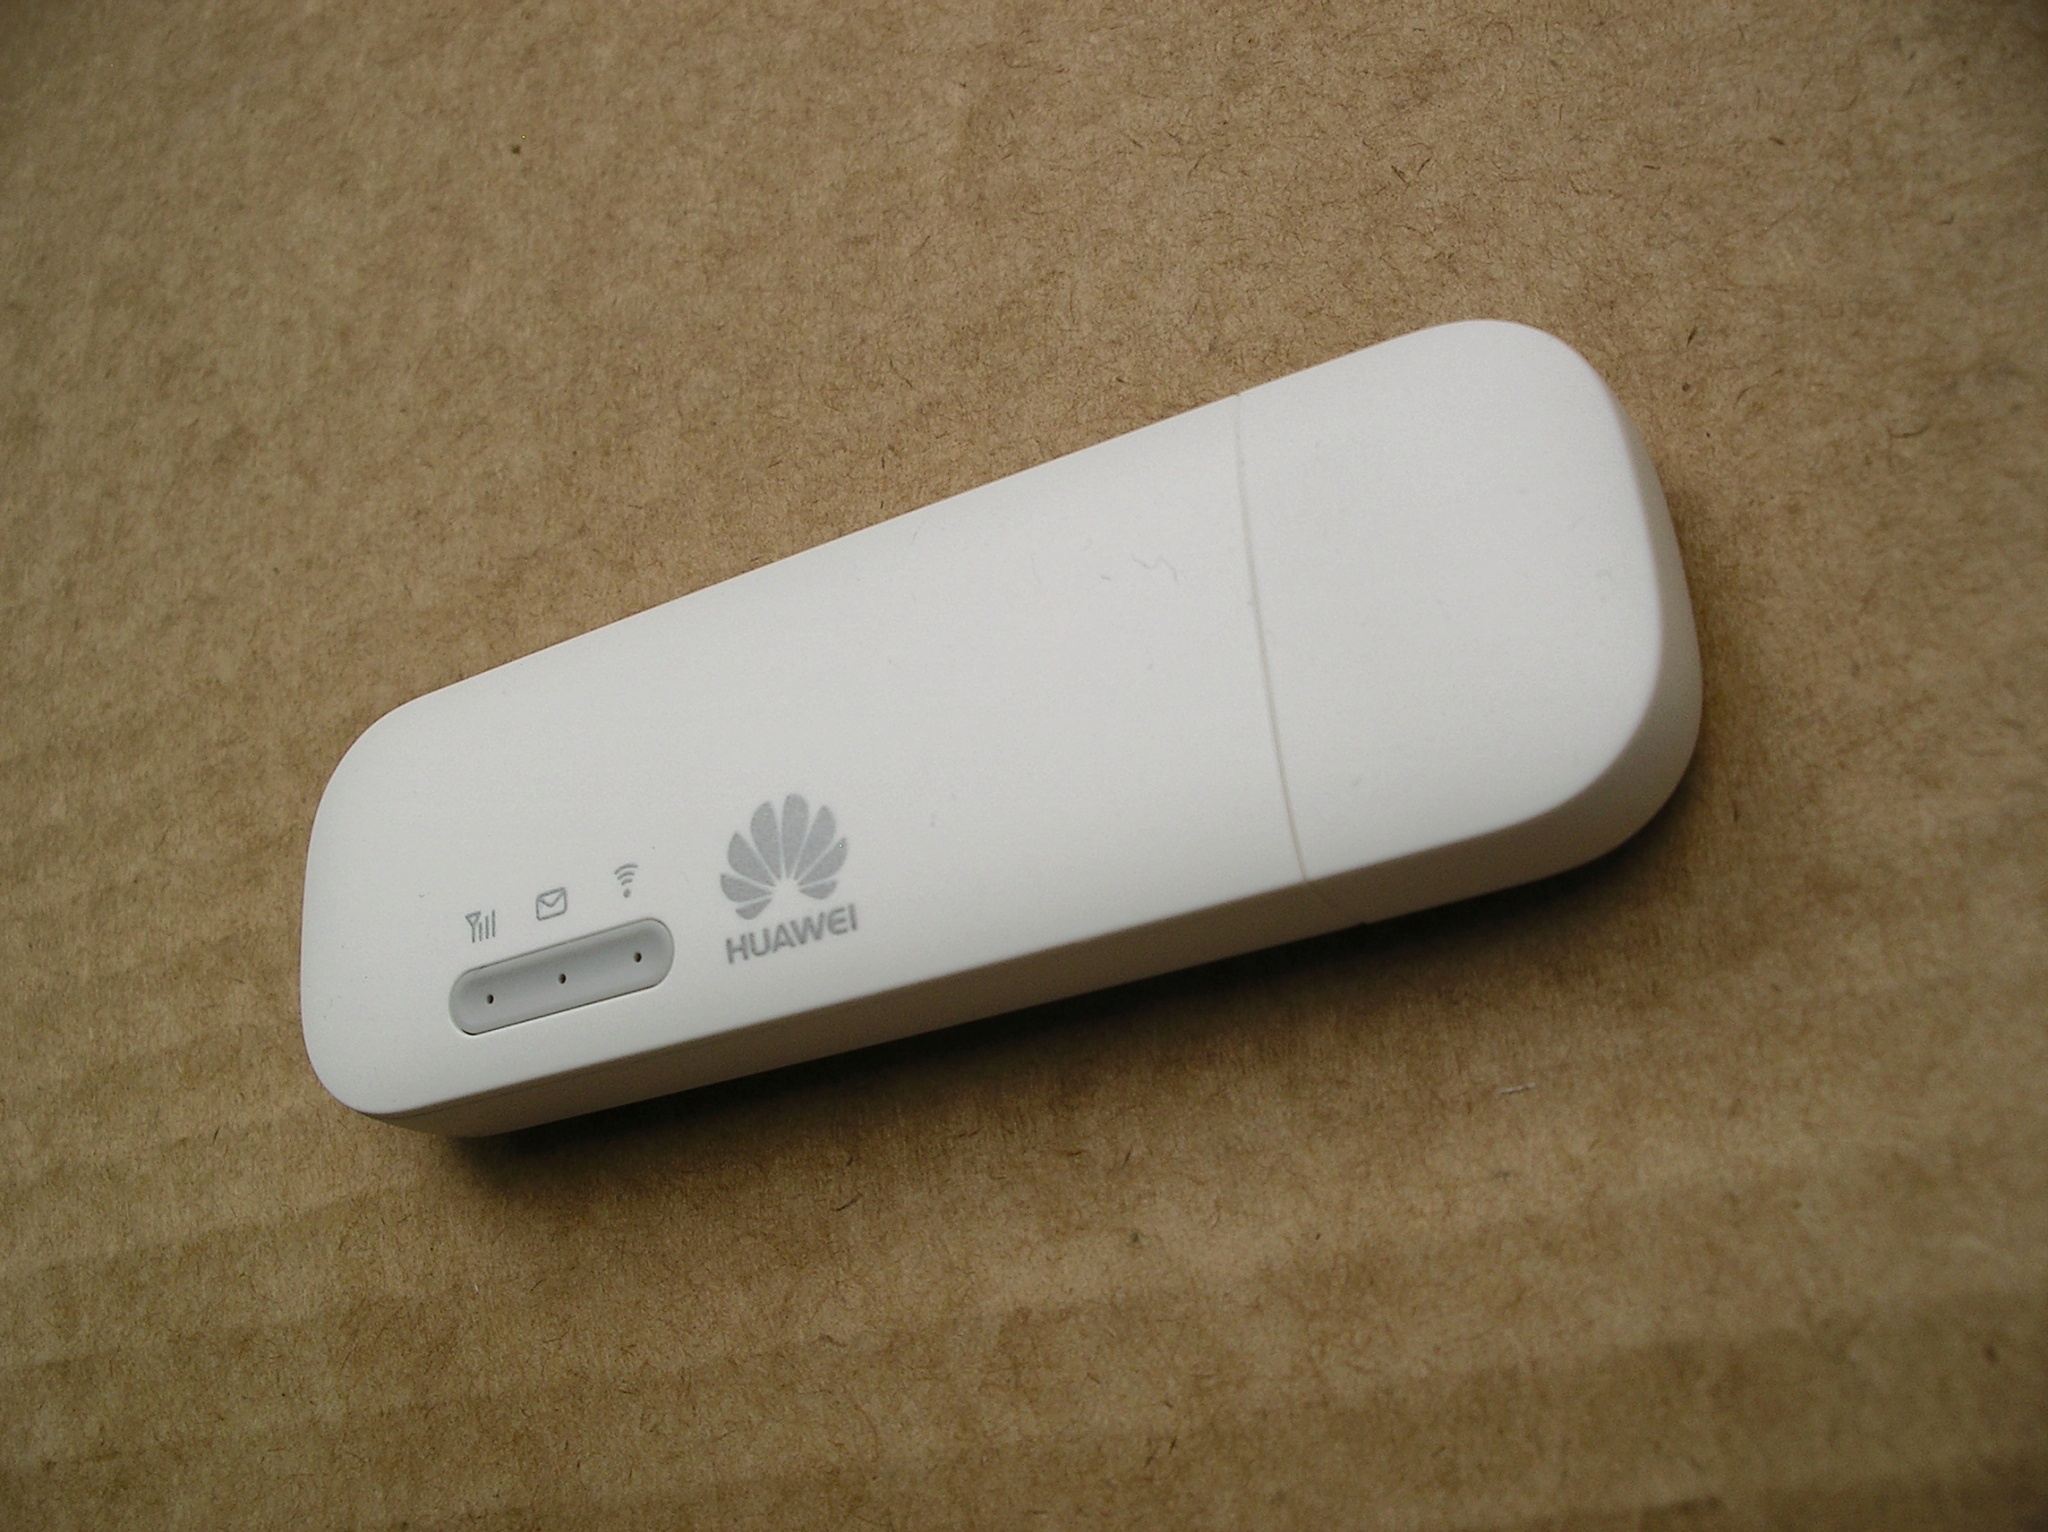 Подключение с использованием режима модема через Wi-Fi, Bluetooth или USB